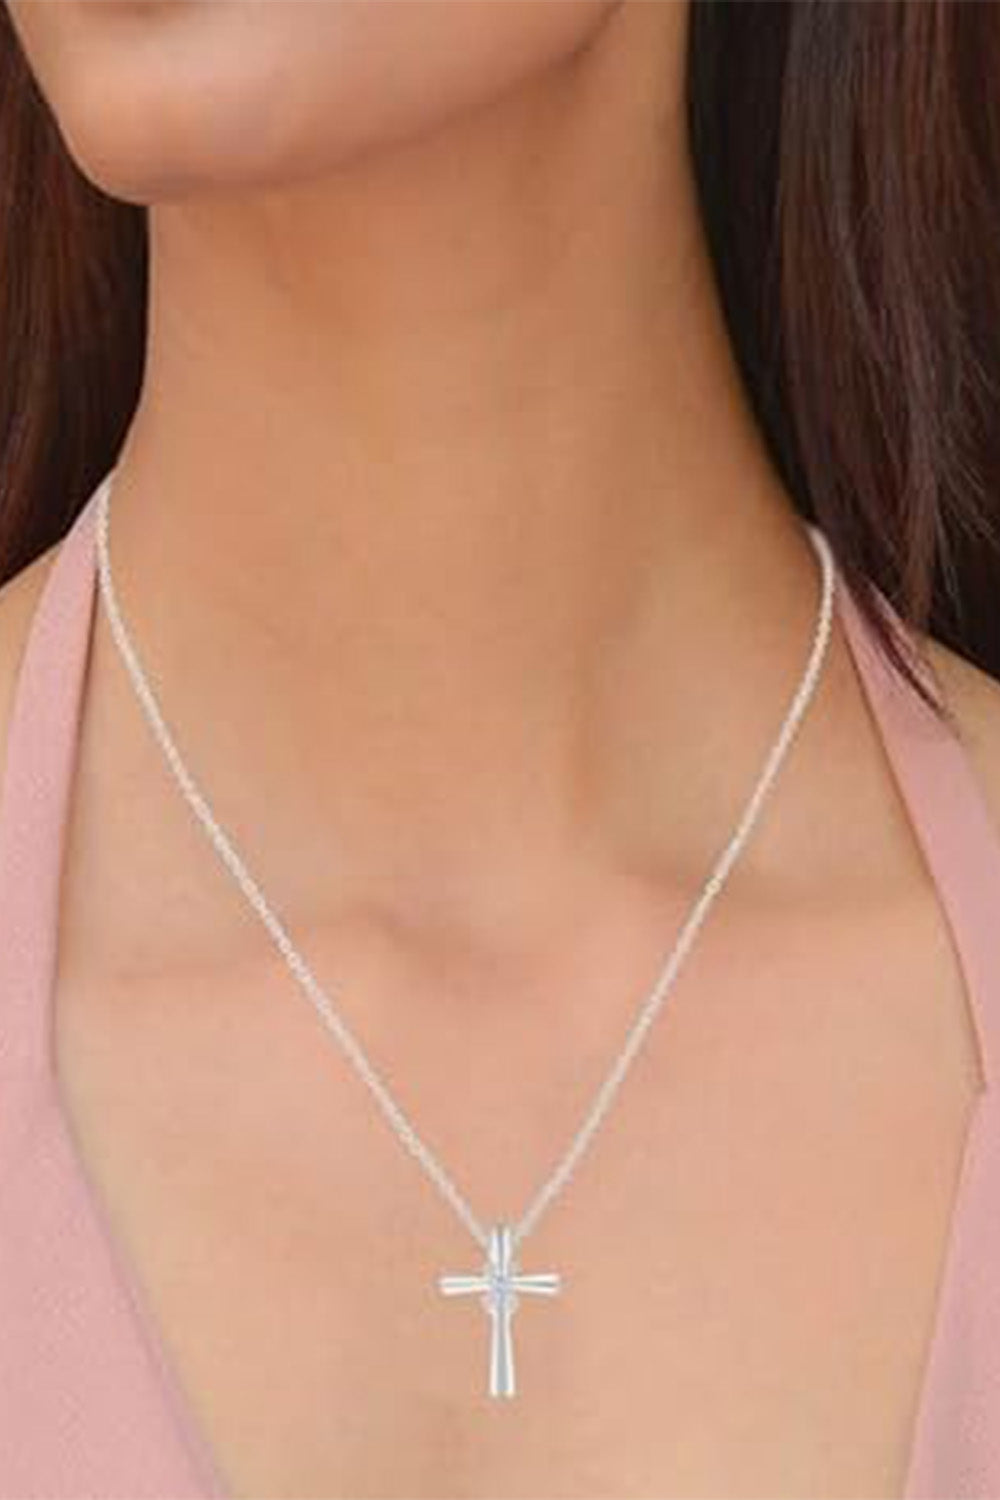 Buy Infinity Cross Pendant Necklace 